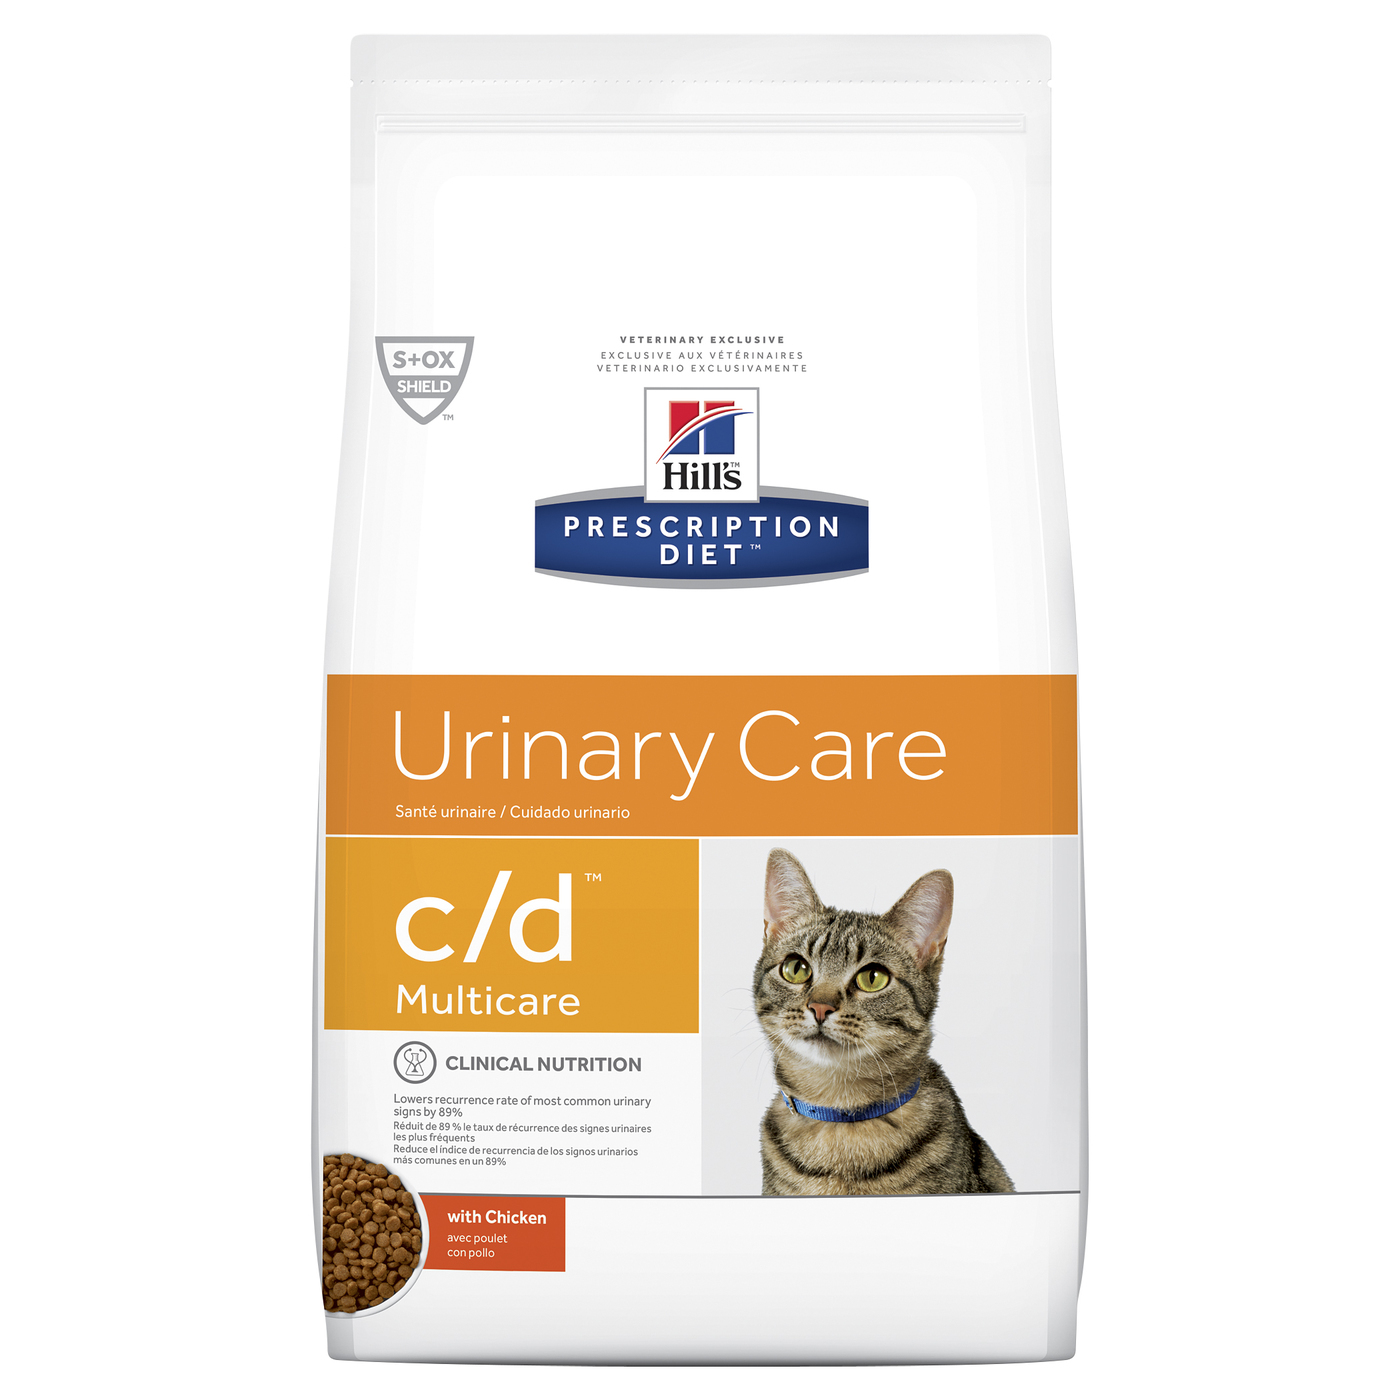 Hills Prescription Diet c/d Multicare Urinary Care Dry Cat Food image 0